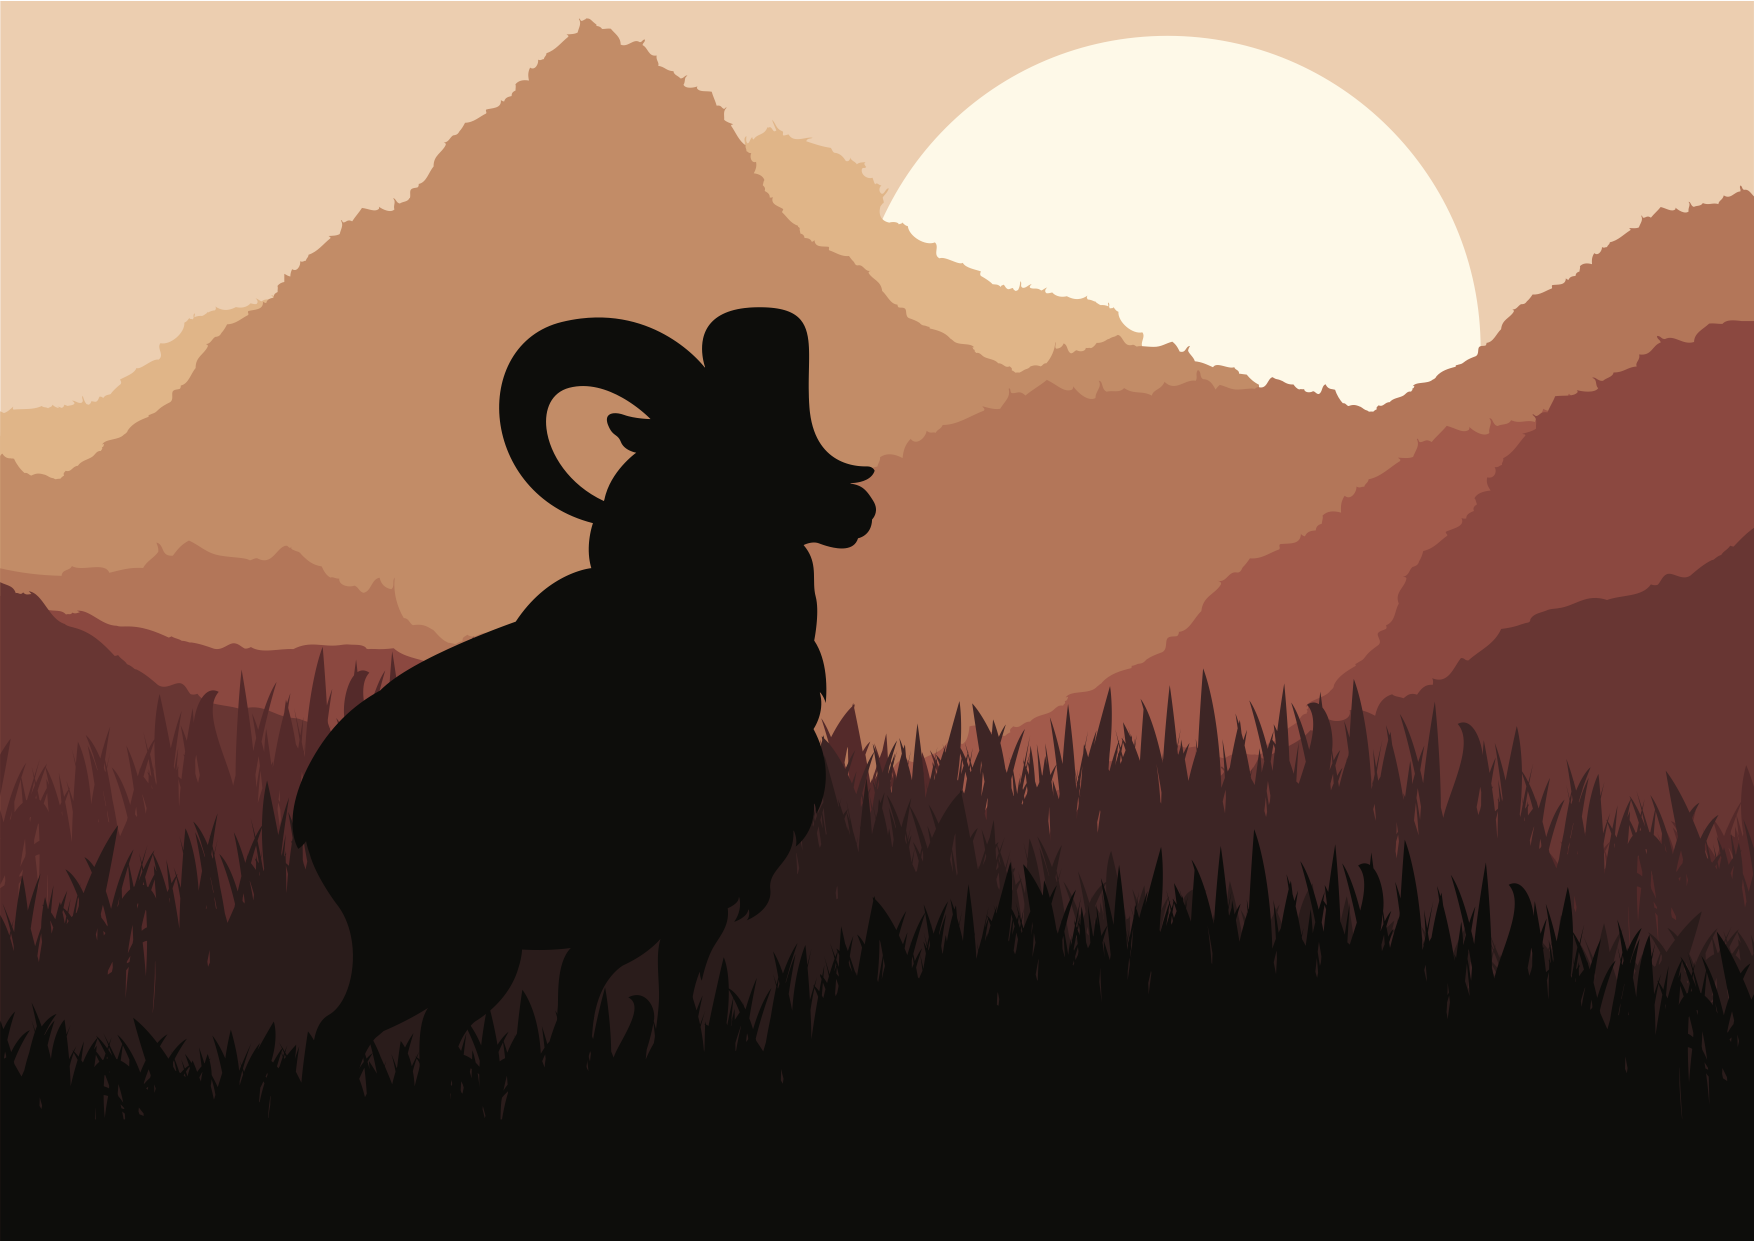 Mountain goat in wild nature landscape illustration